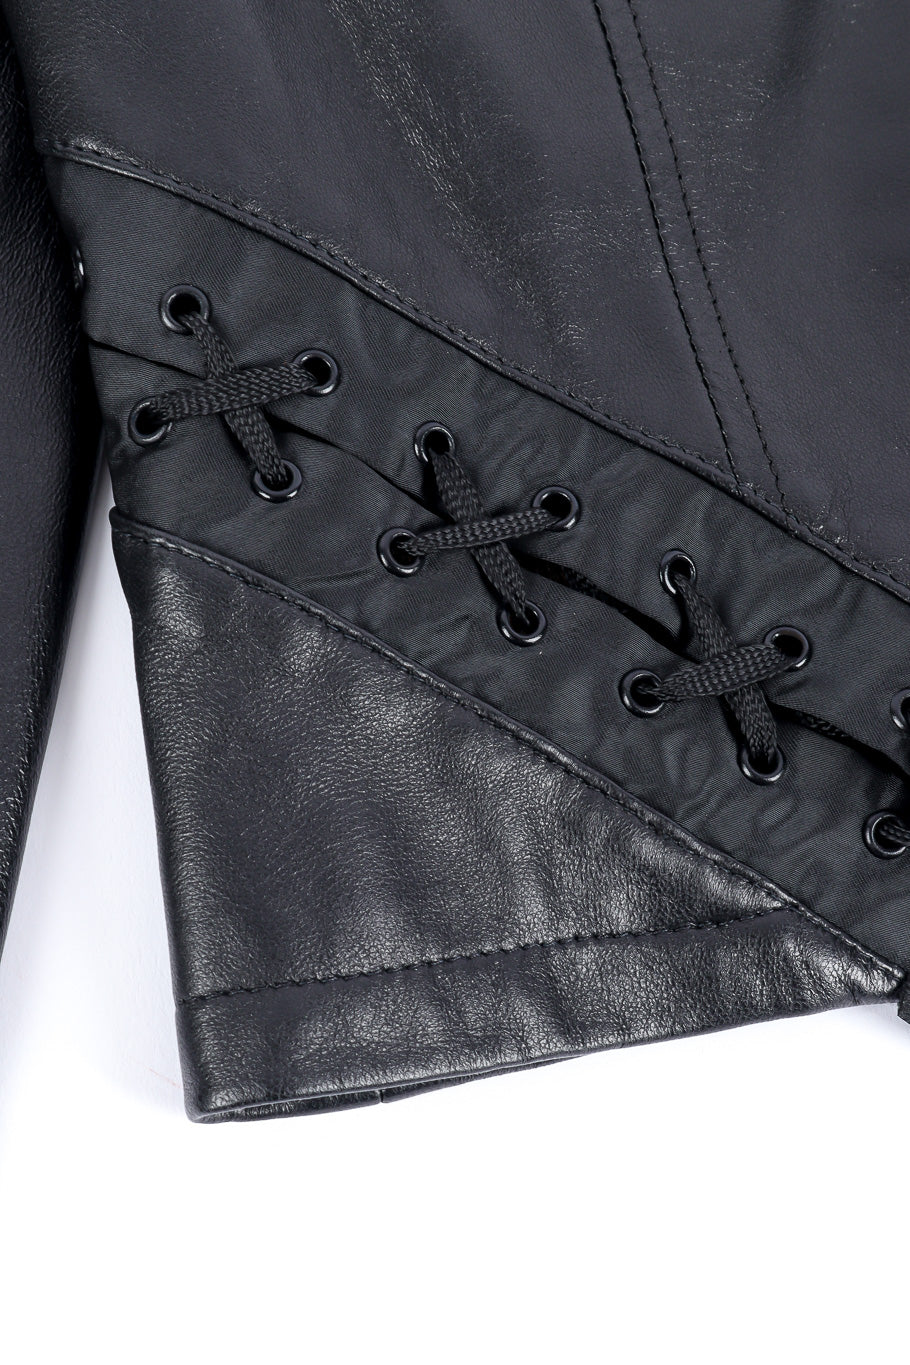 Dolce & Gabbana leather panther jacket lace detail @recessla